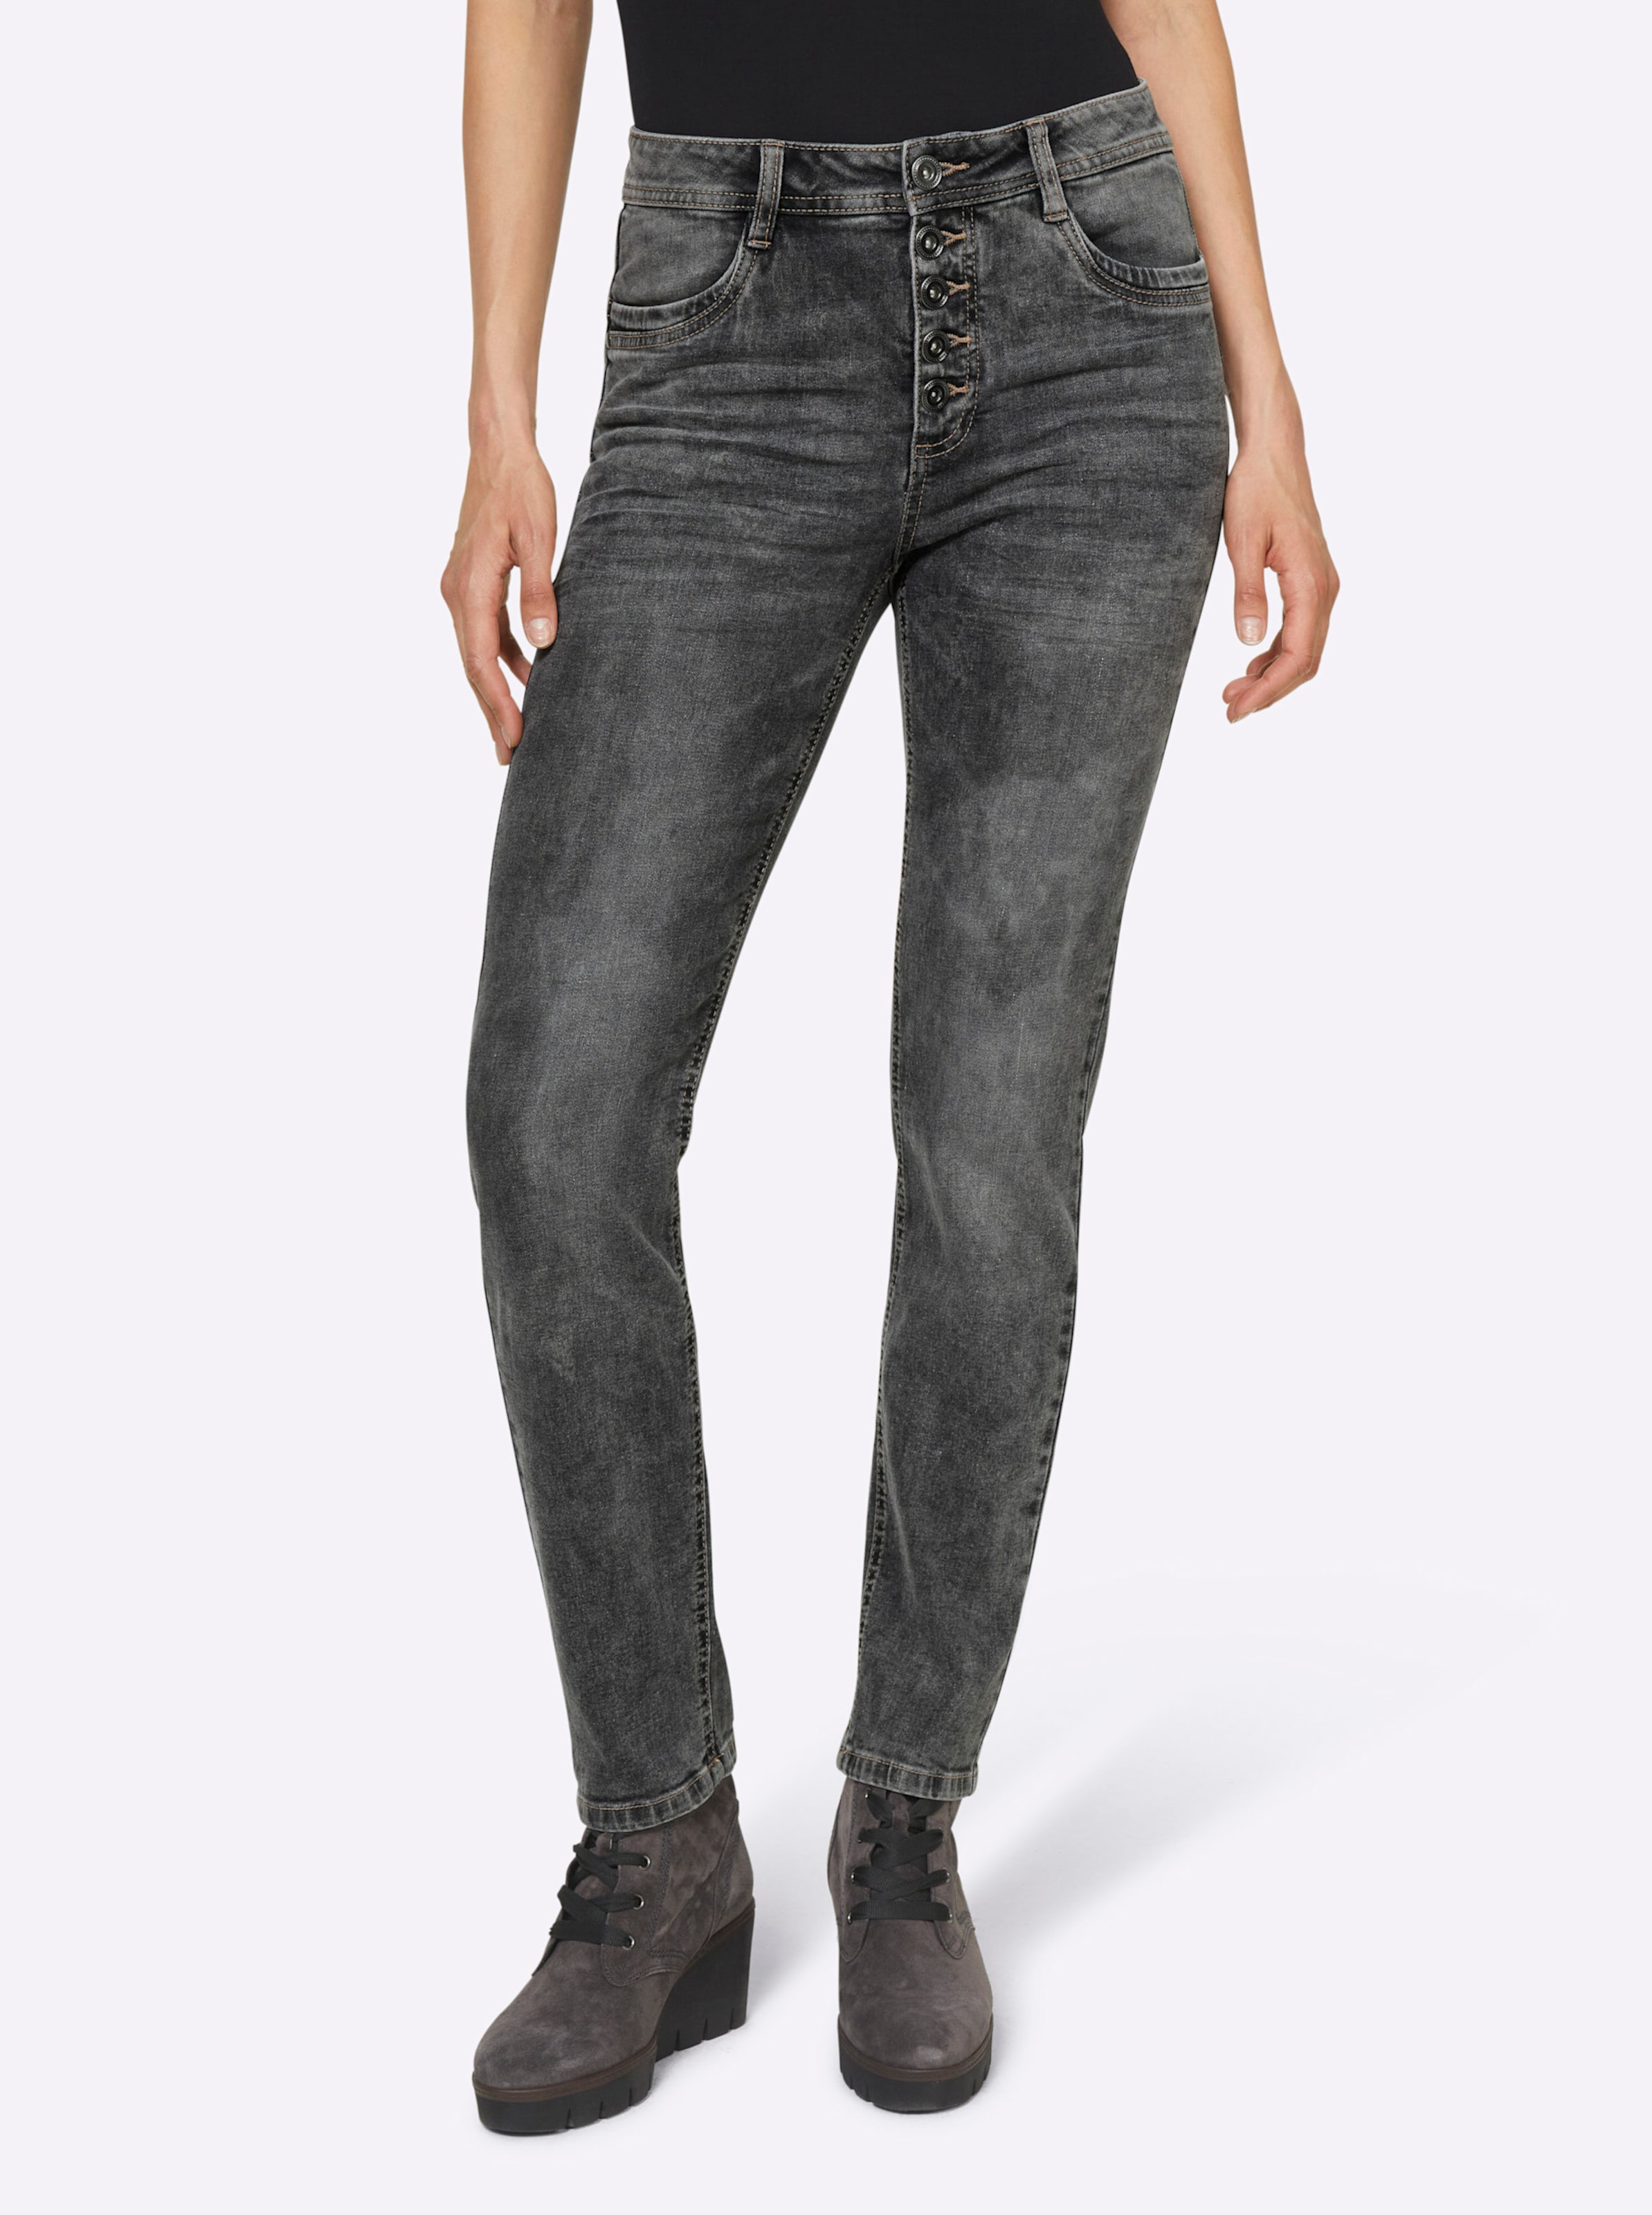 Witt Damen Push-up-Jeans, grey-denim